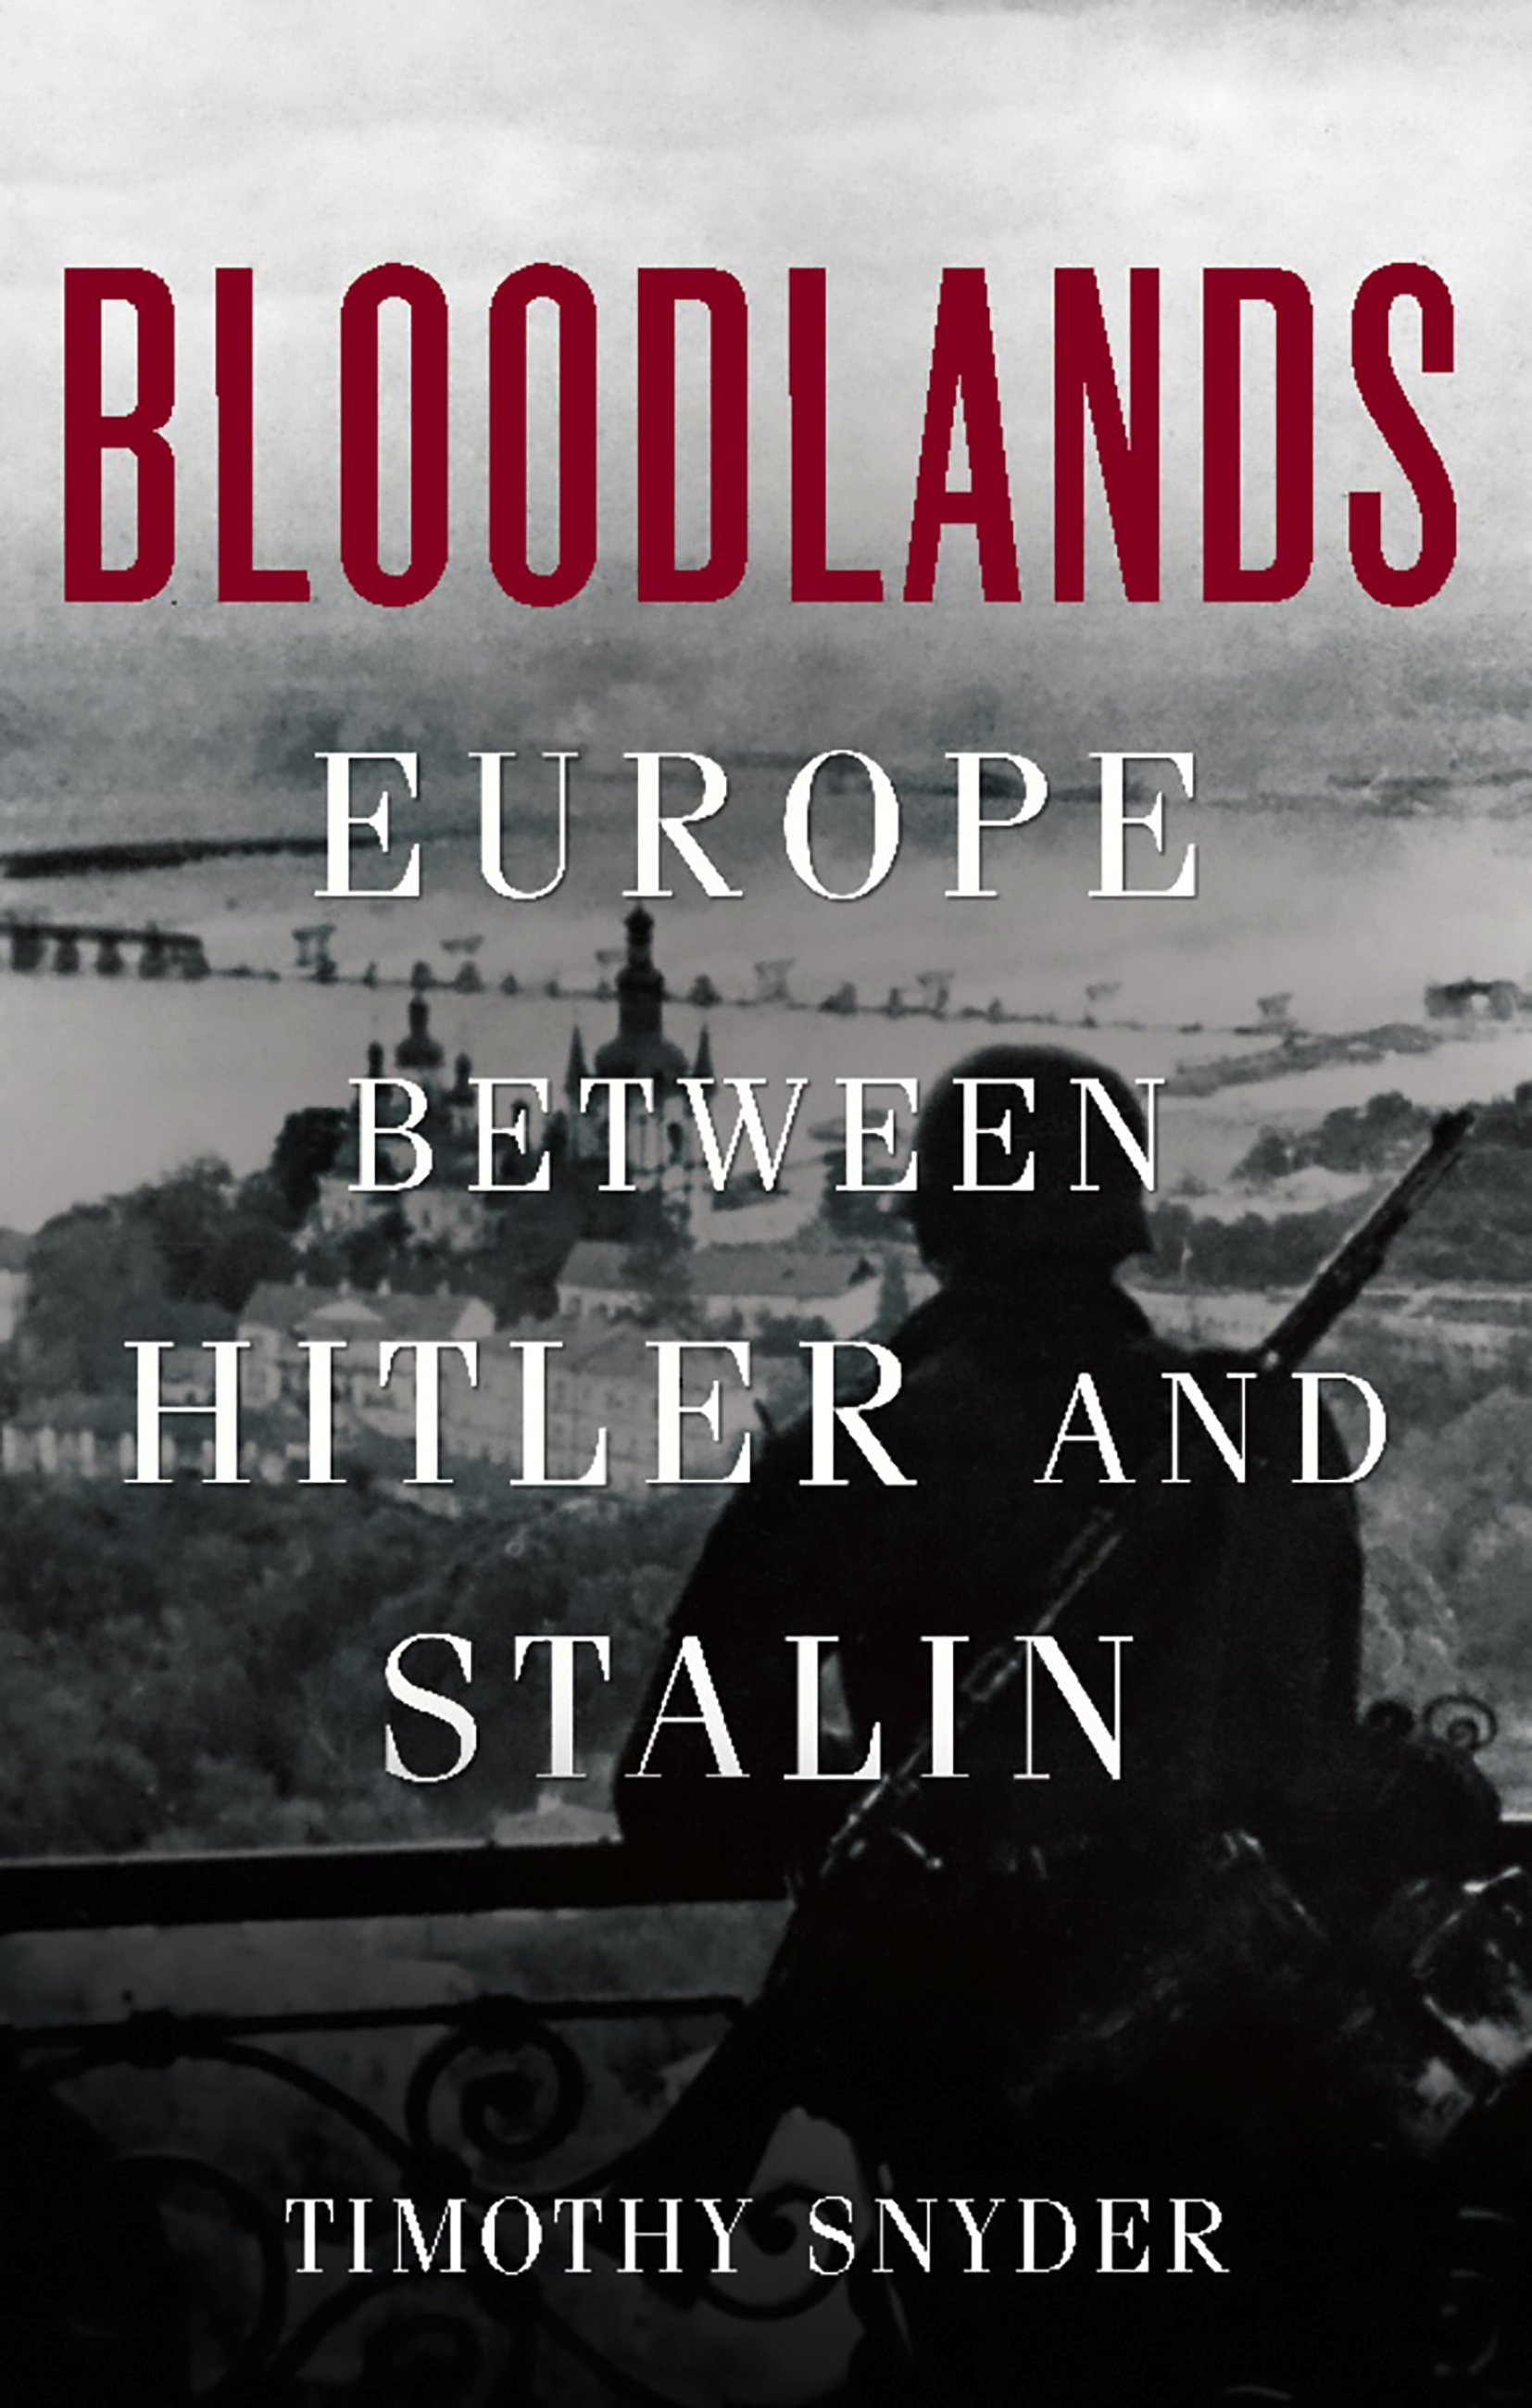 Bloodlands by Timothy Snyder | Basic Books